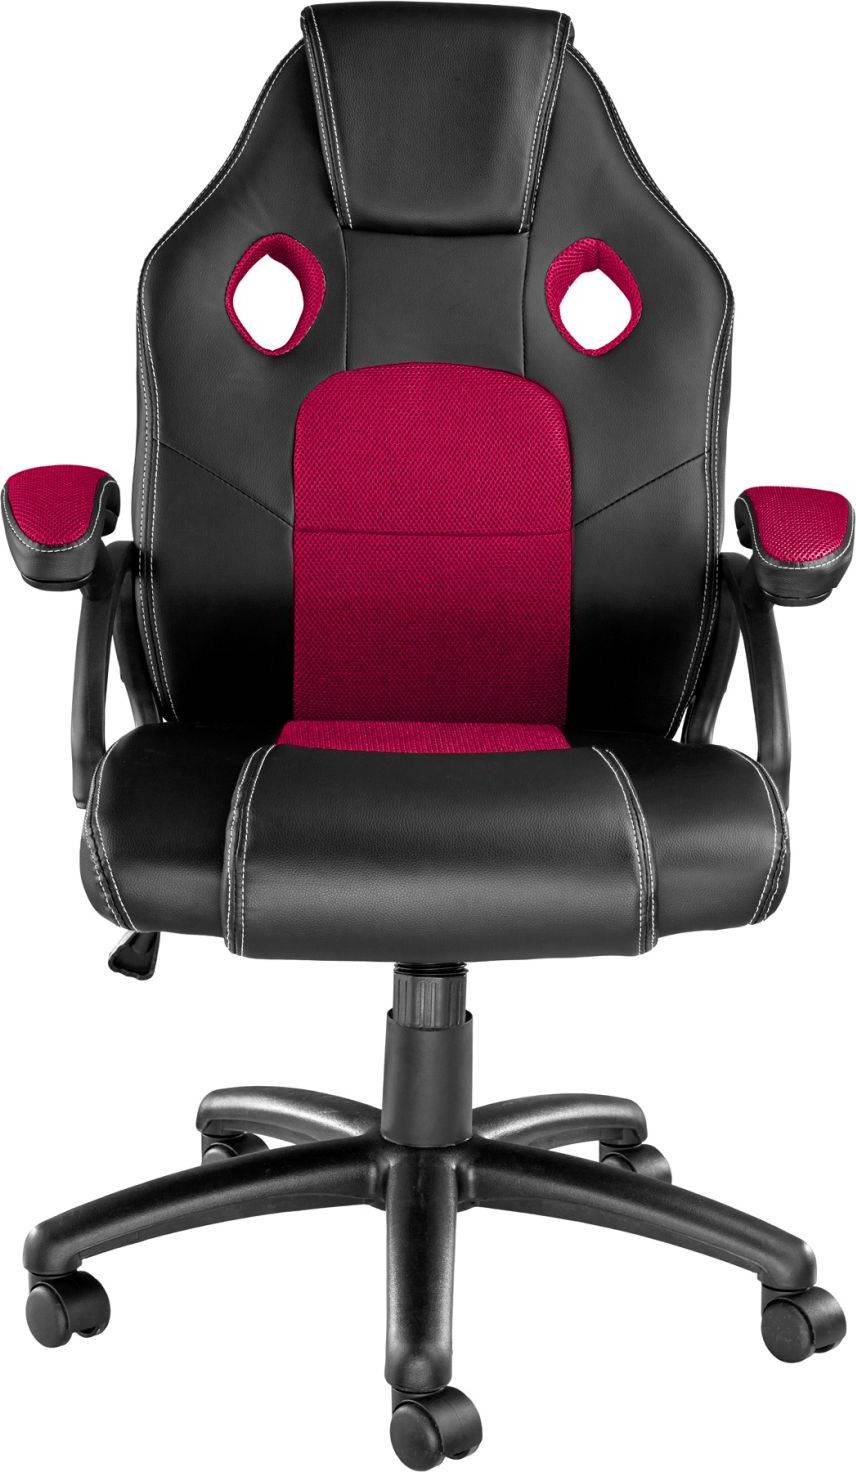  Bild på tectake Mike Gaming Chair - Black/Red gamingstol